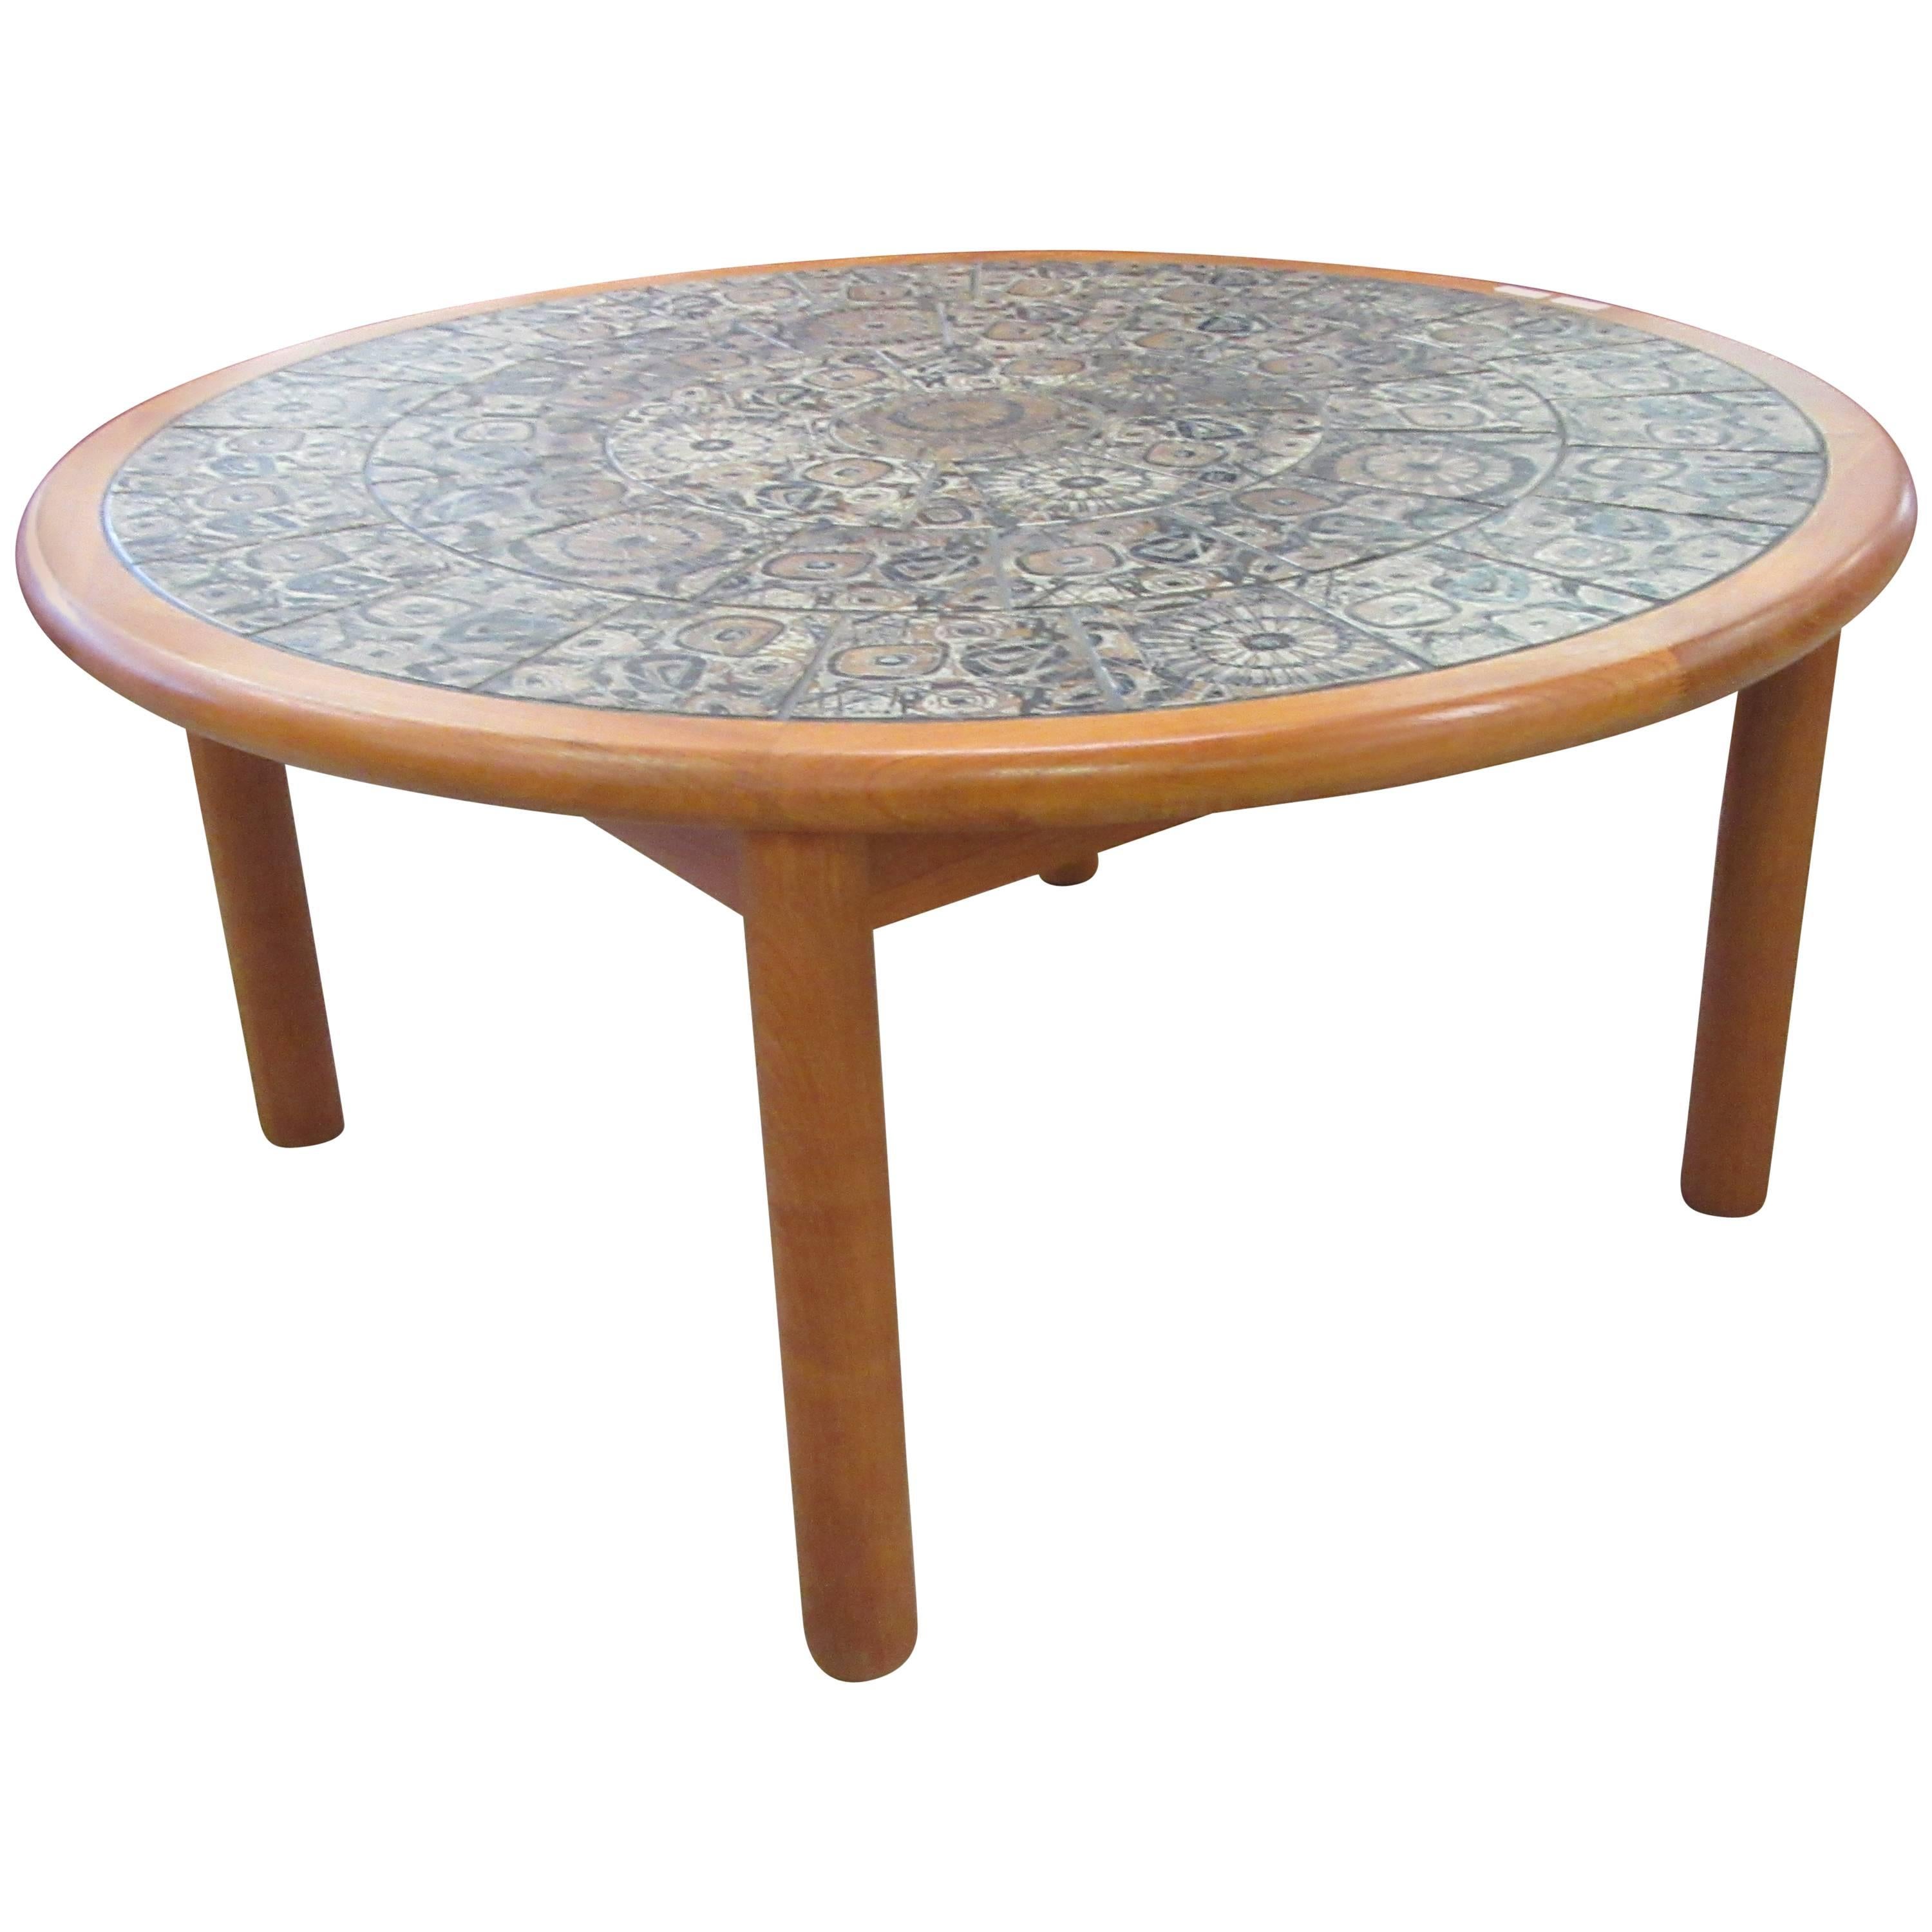 Low Teak Table with Royal Copenhagen Ceramic Top